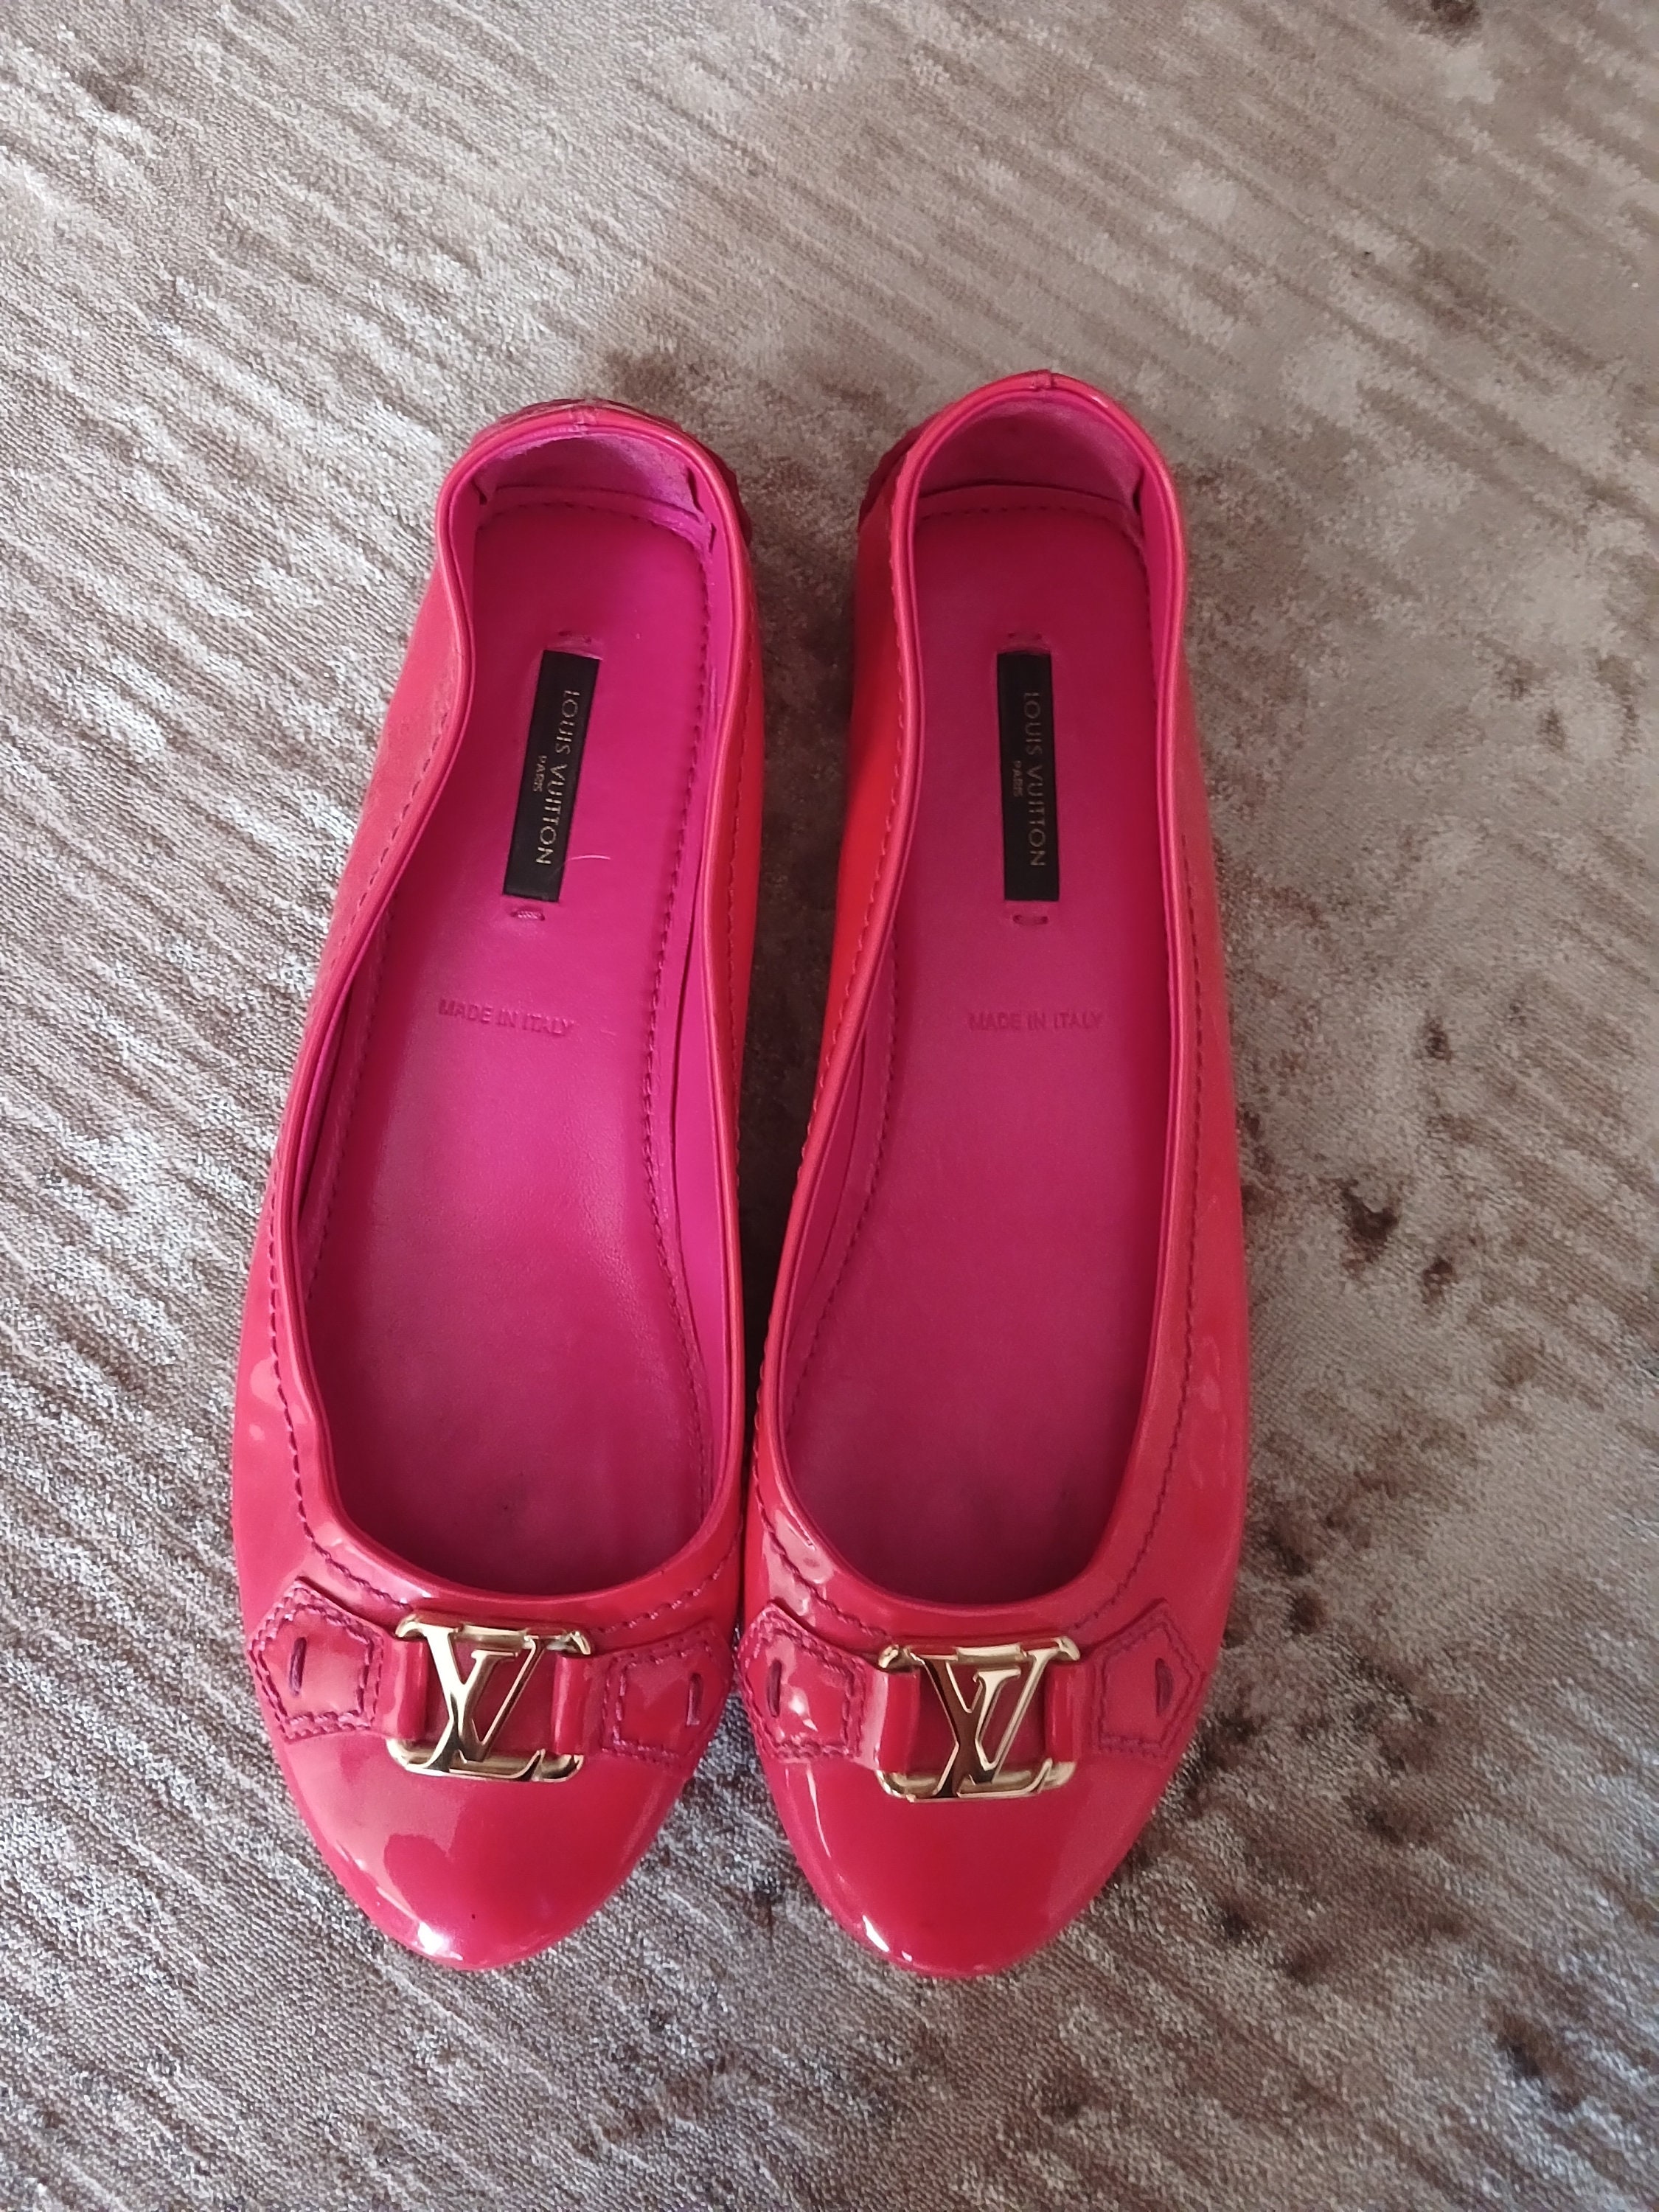 Authentic Louis Vuitton Monogram Pink Ballerina Denim Ballet Flats - Size  8.5 US